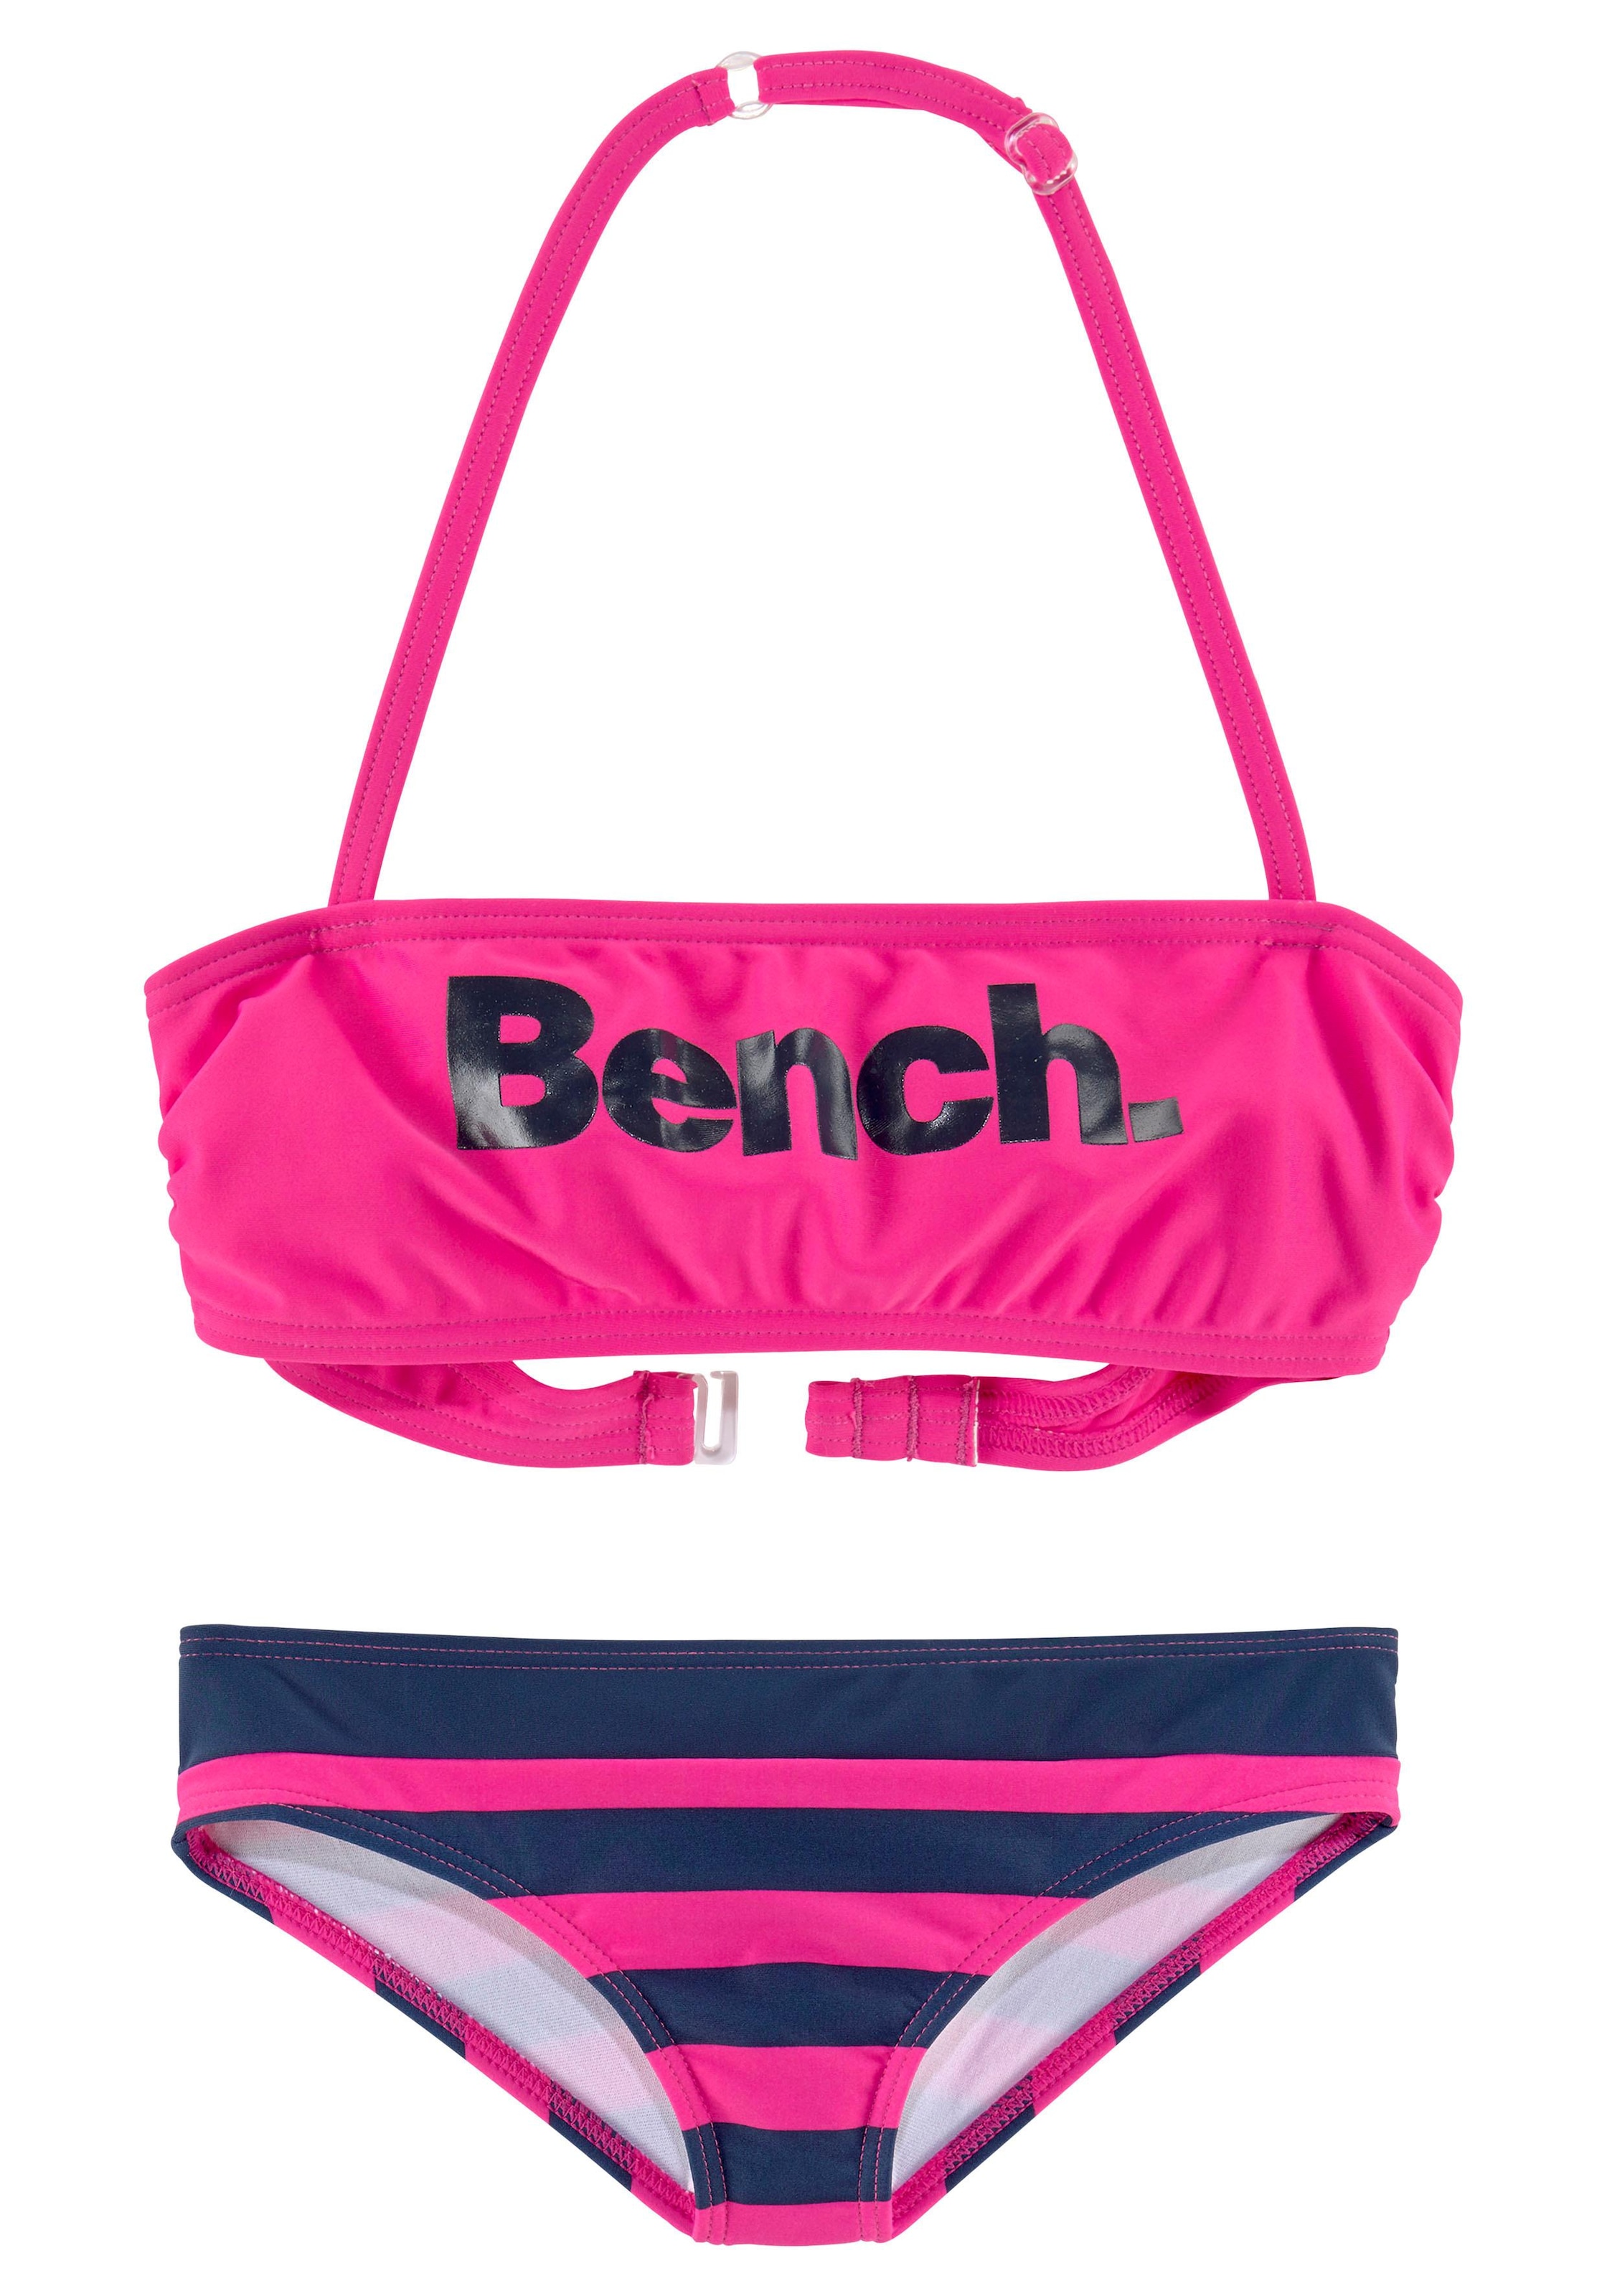 Bench. Bandeau-Bikini mit großem Logoprint online kaufen | BAUR